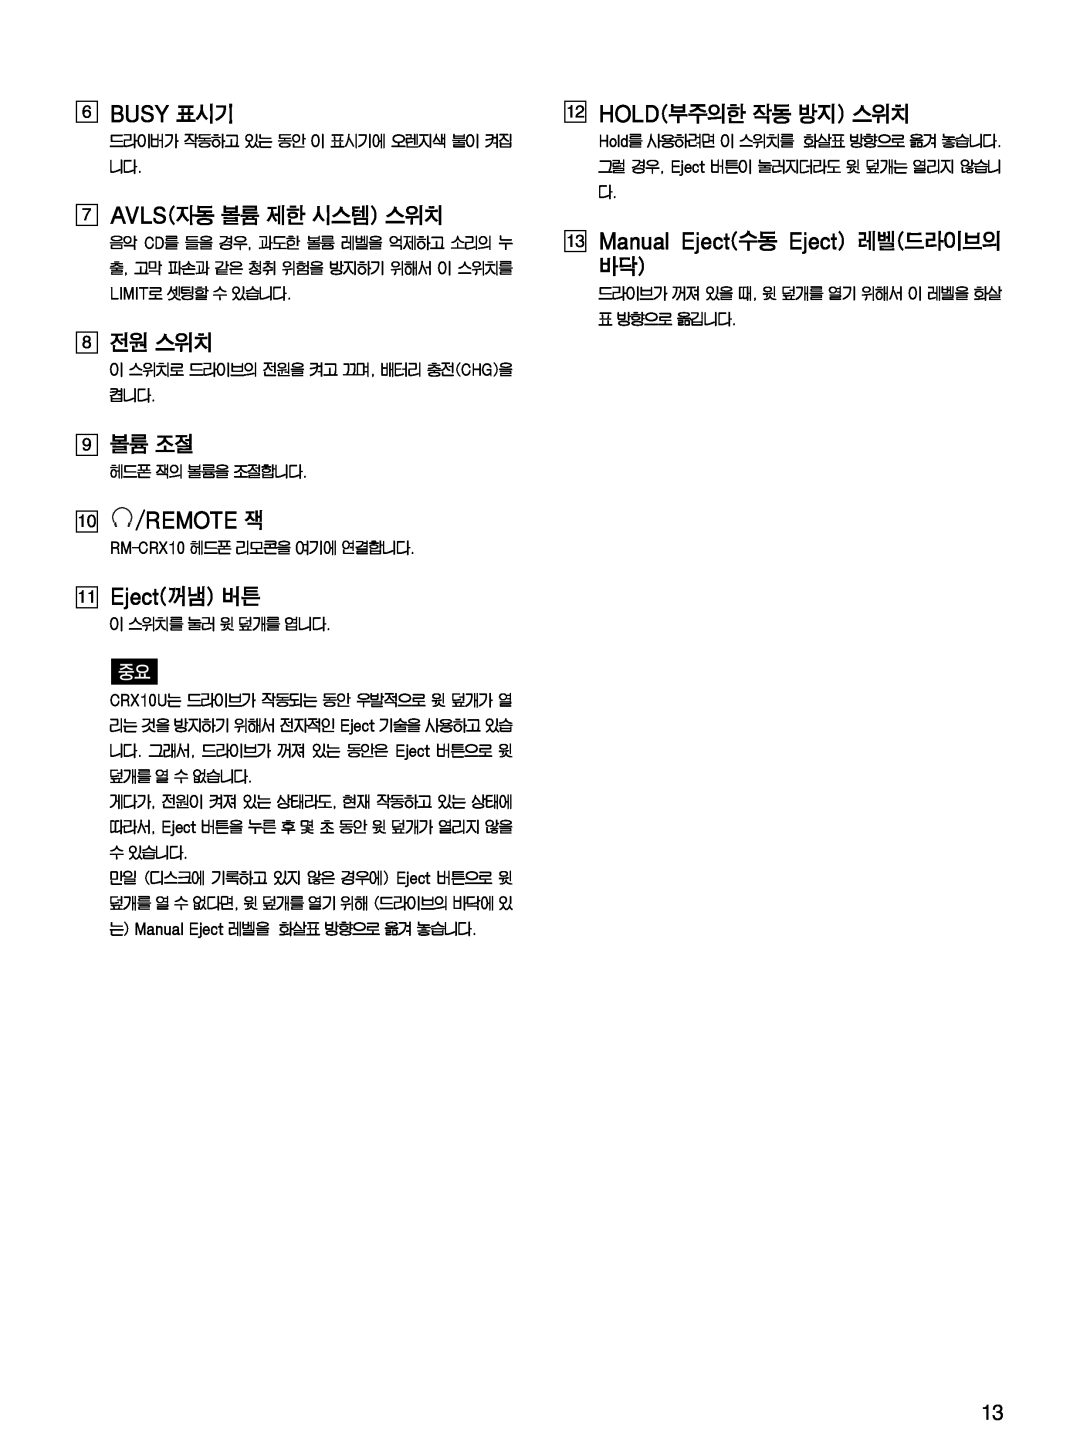 Sony CRX10U manual 6 7 8 